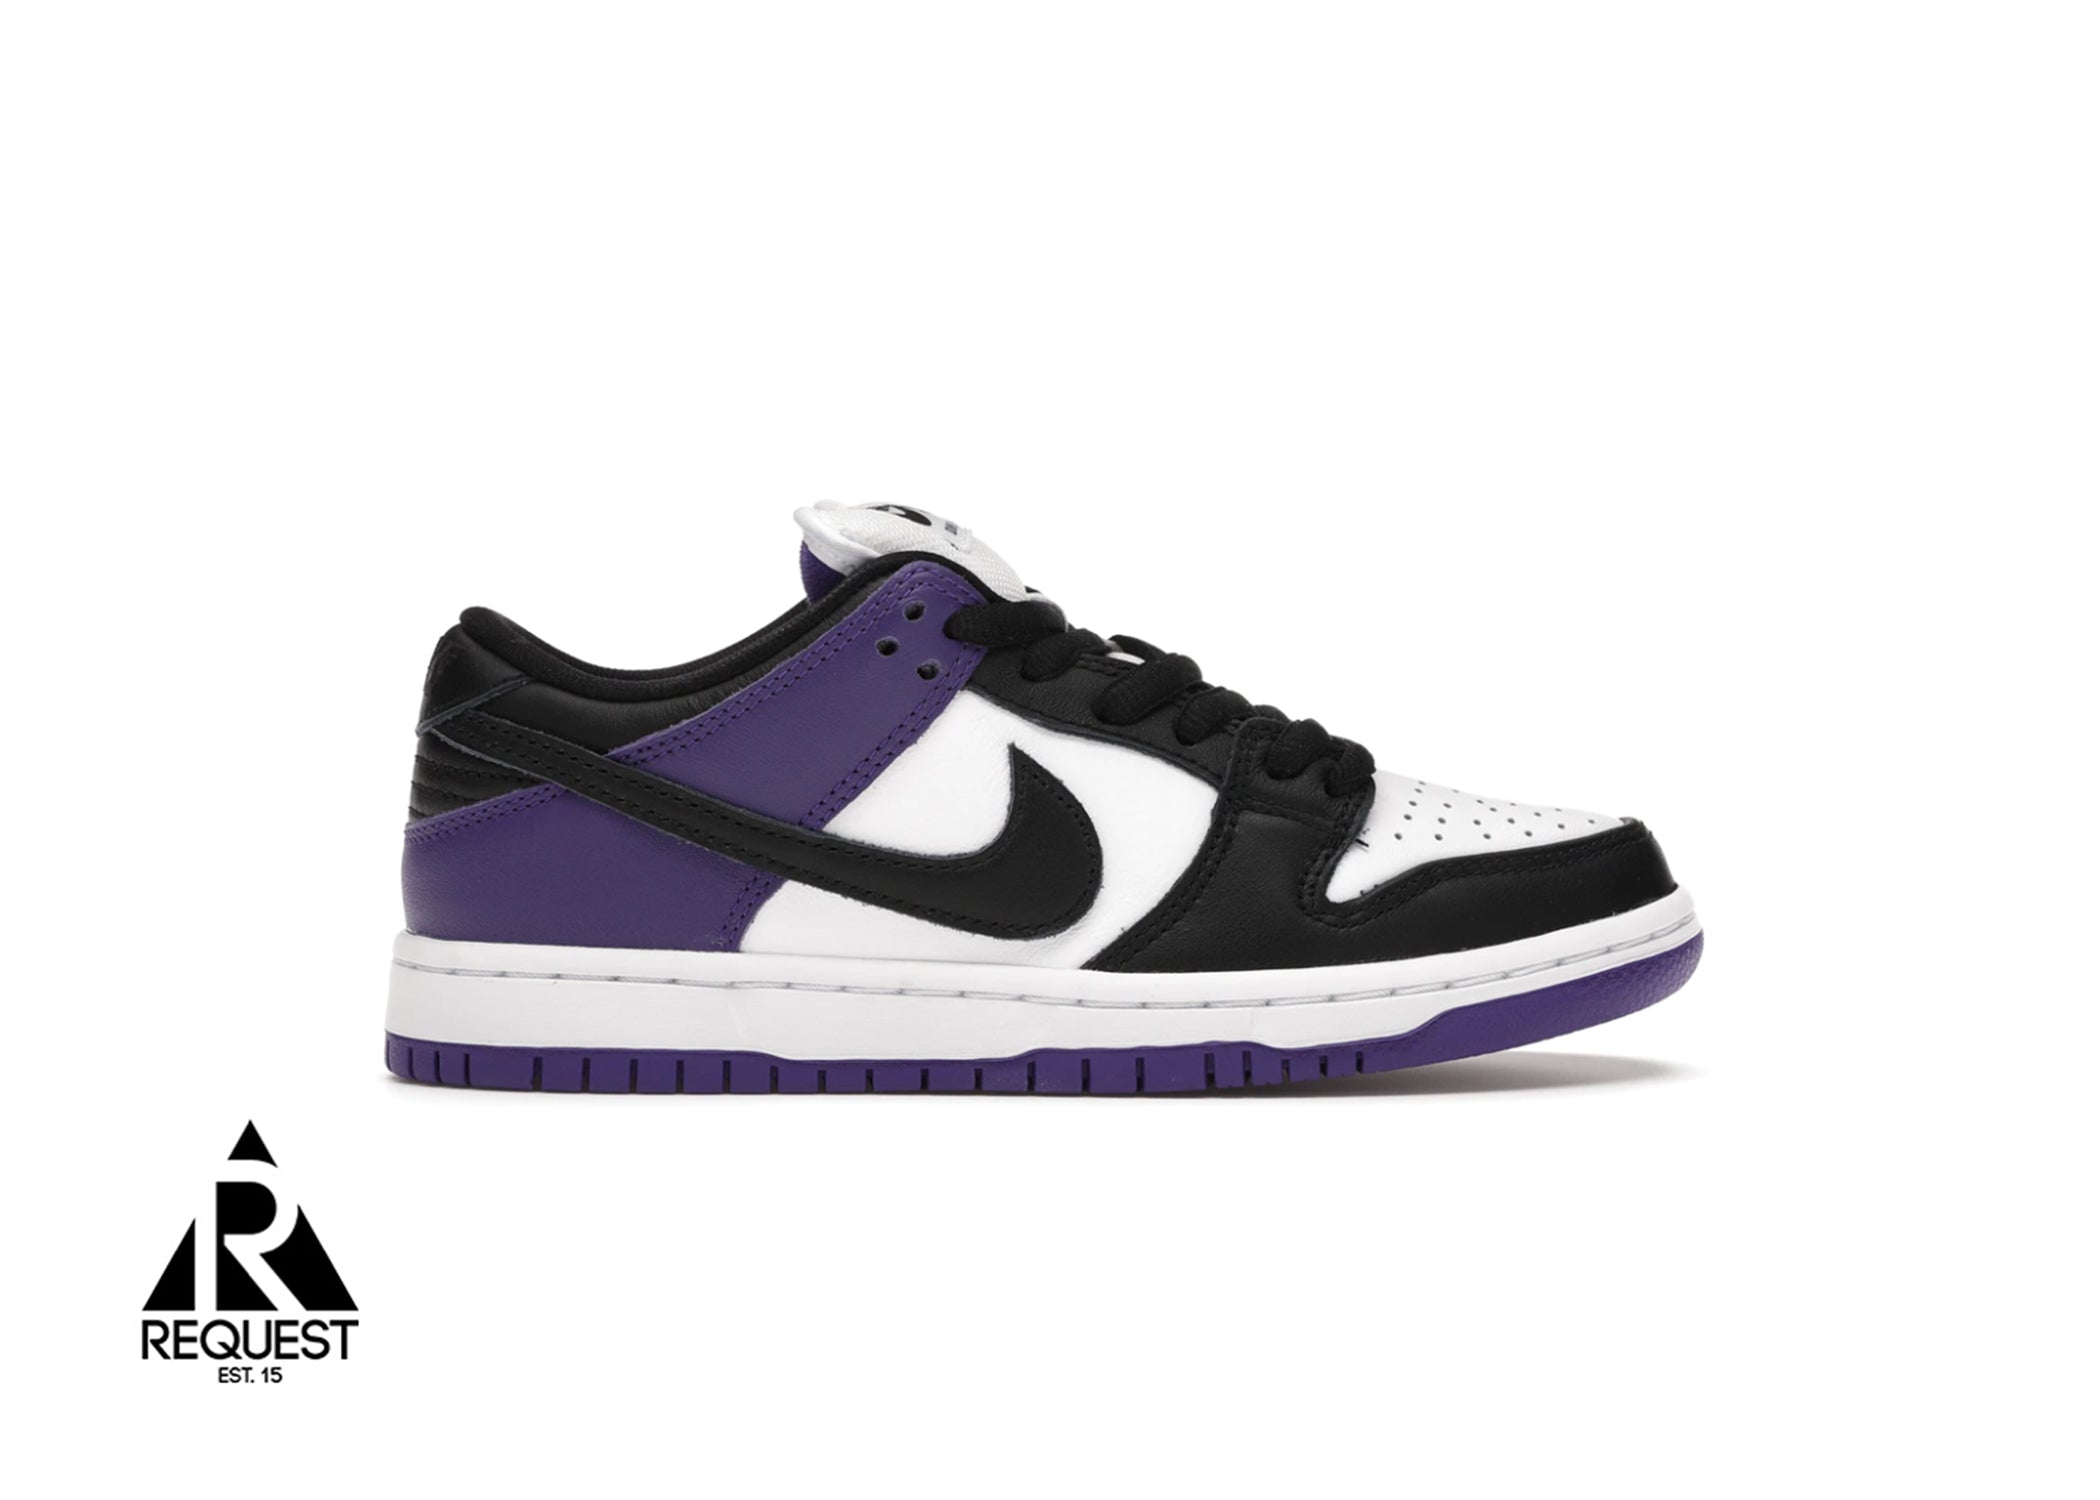 Nike Sb Dunk Low “Court Purple”